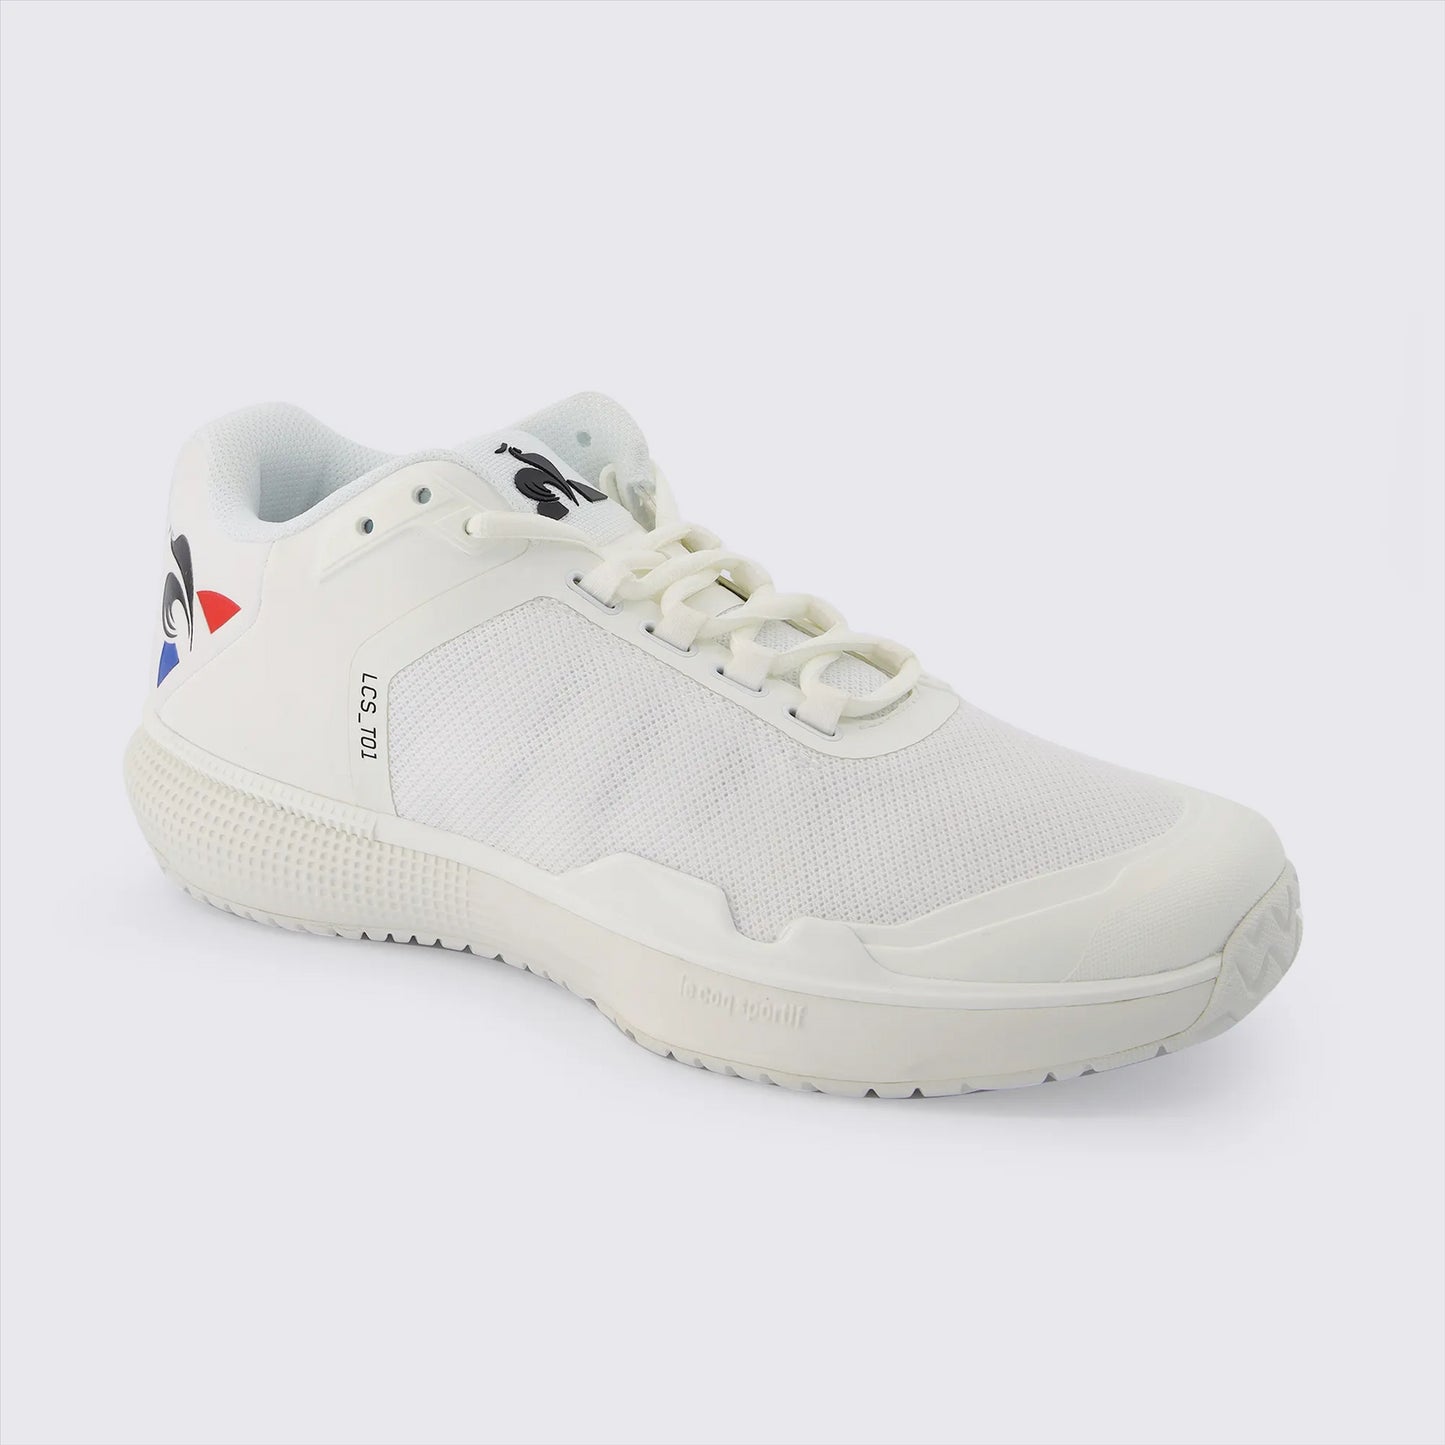 Le Coq Sportif Futur LCS T01 All Court Tennis Shoes - White - Front Right